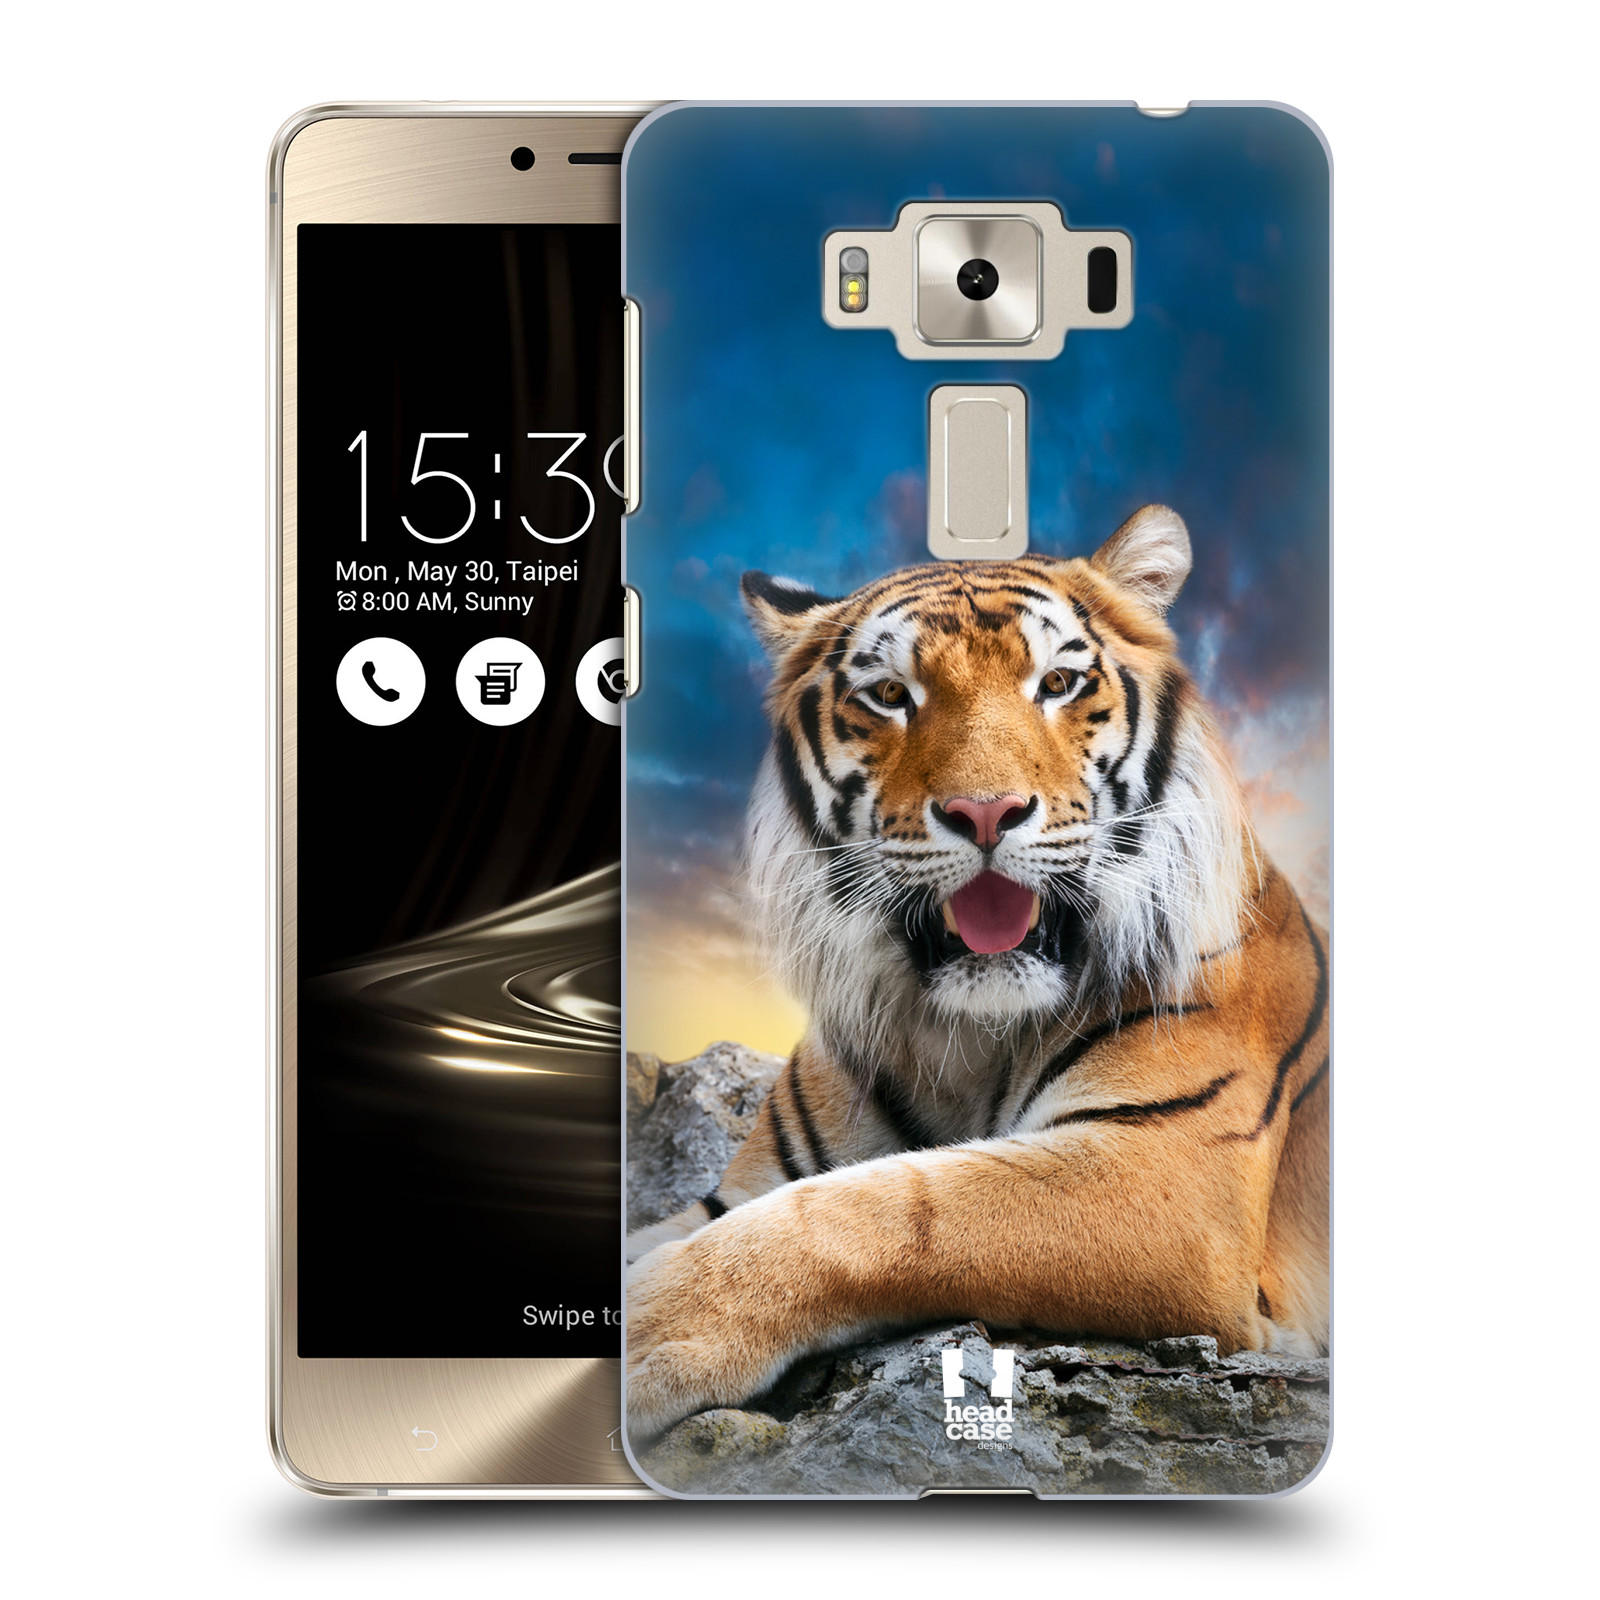  HEAD CASE plastový obal na mobil Asus Zenfone 3 DELUXE ZS550KL vzor Divočina, Divoký život a zvířata foto TYGR A NEBE